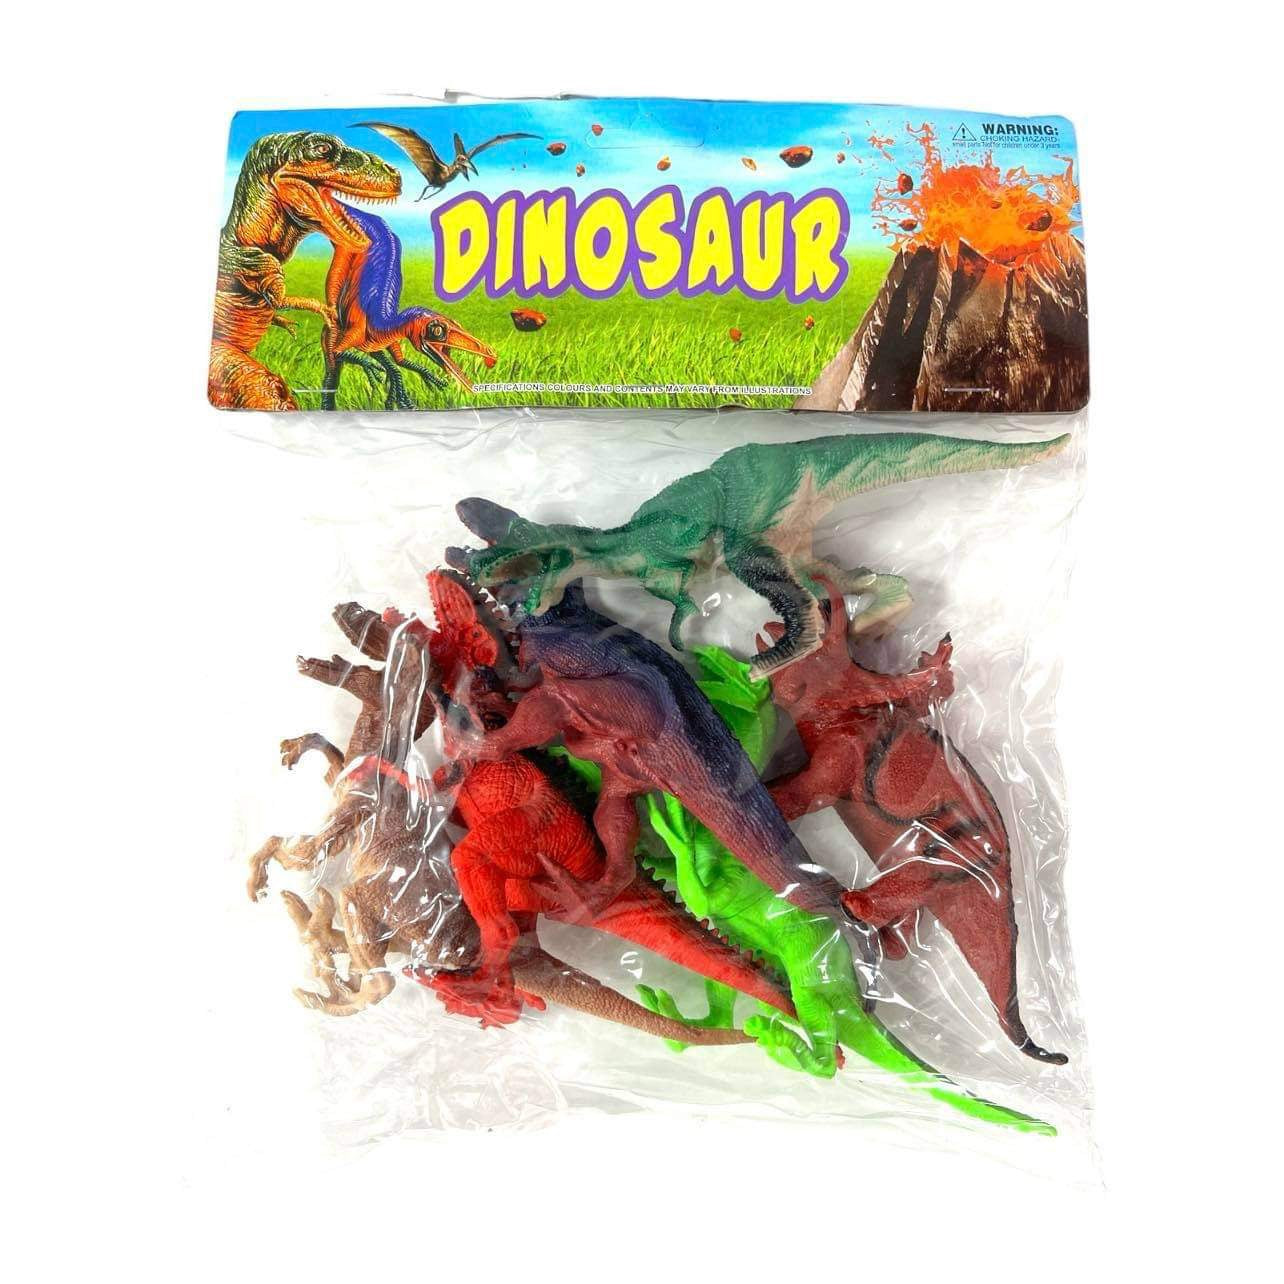 Dinosaurs Toy Figures || العاب مجسمات ديناصورات